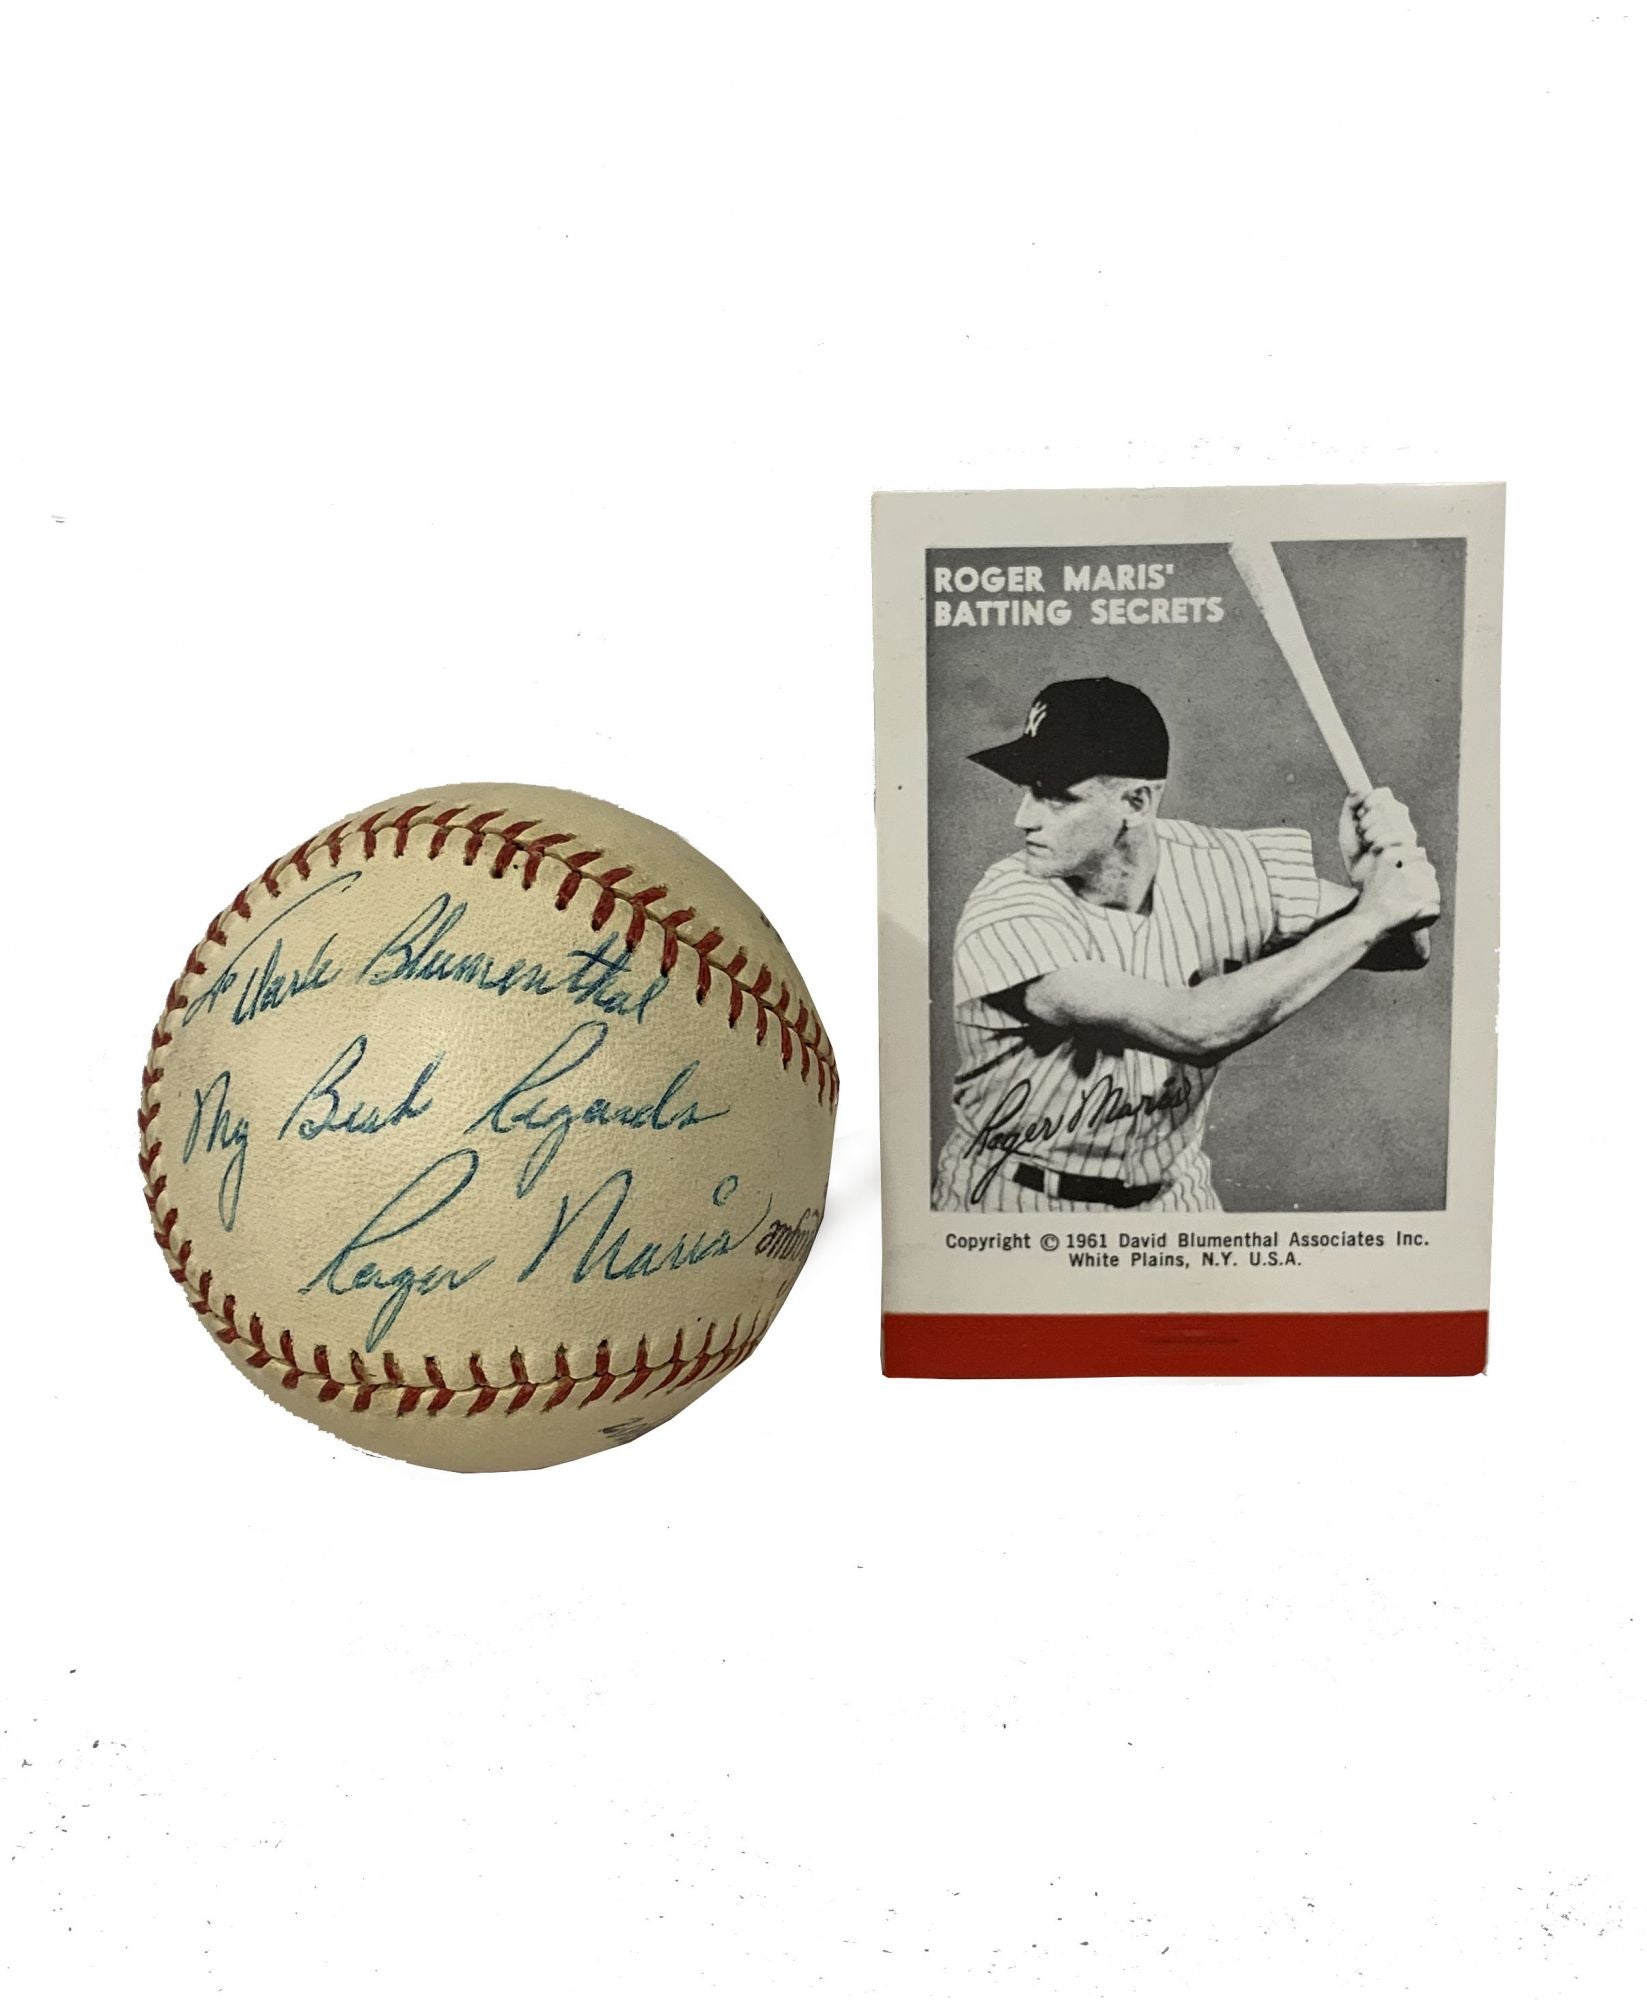 Roger Maris Baseball Inscribed to the New York Yankees' 1961 Team  Photographer with Roger Maris' Batting Secrets - Roger Maris, David  Blumenthal - First Edition